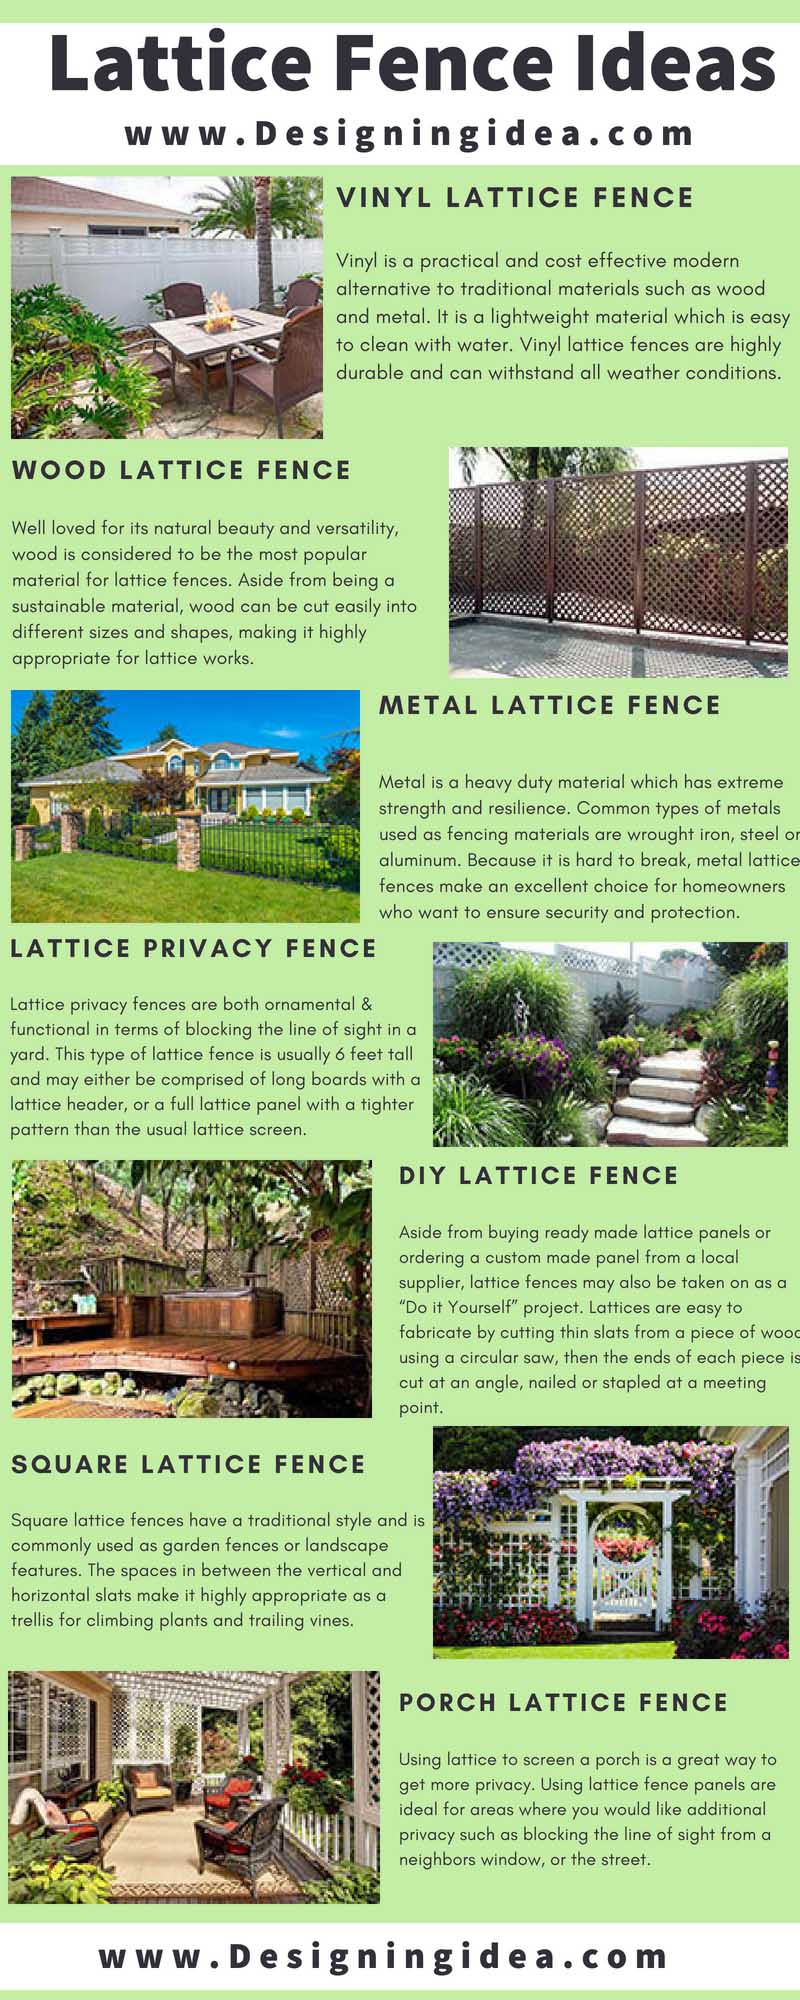 Lattice fence ideas infographic 2018